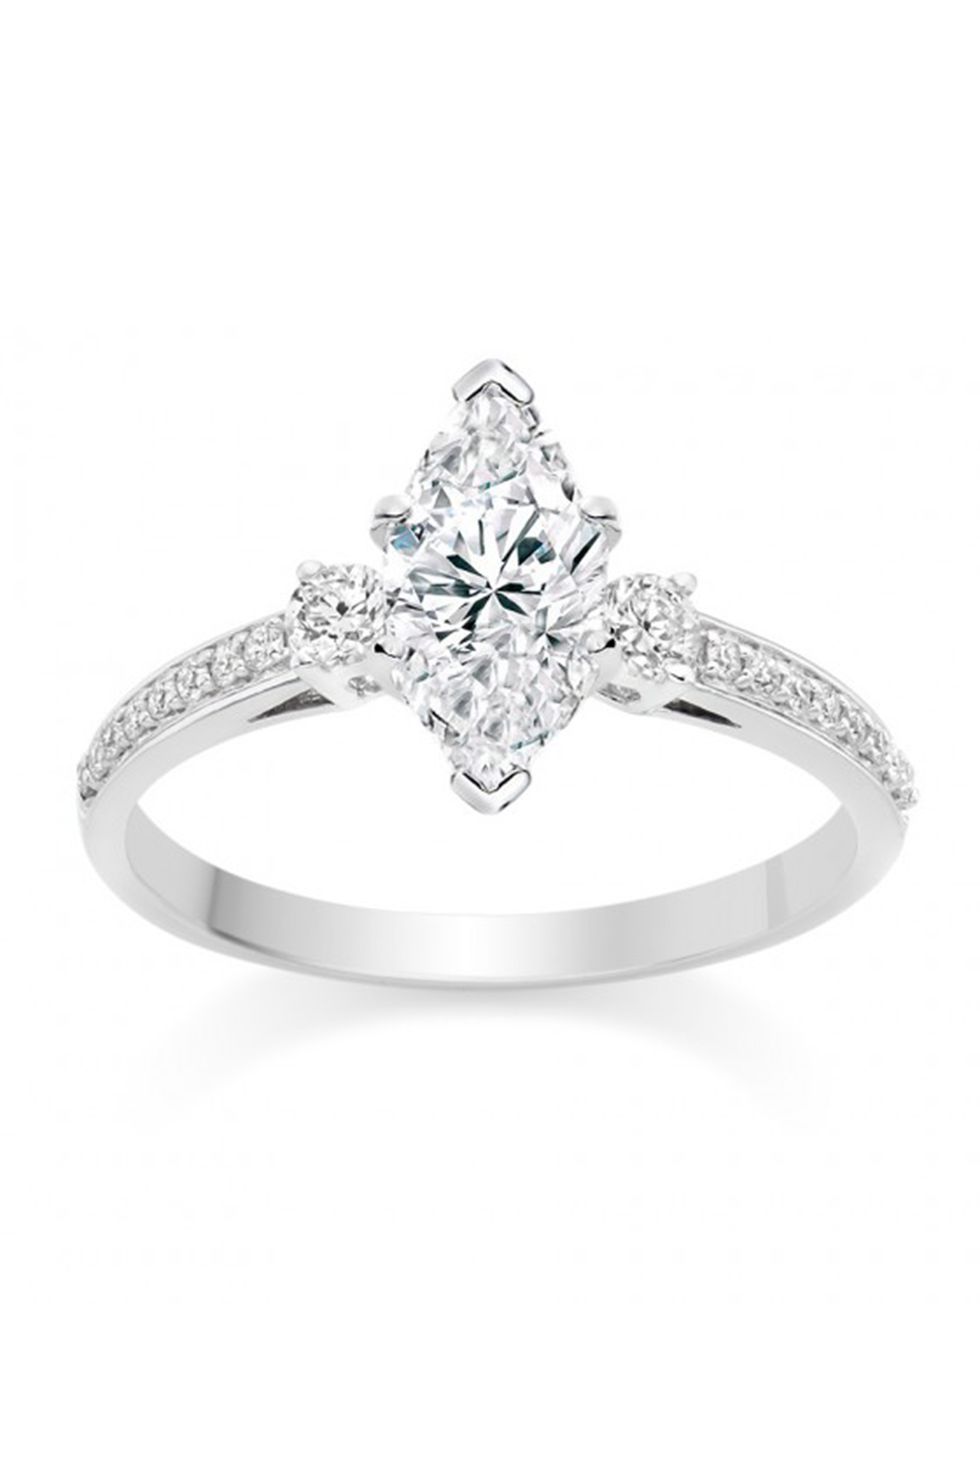 Ring, Engagement ring, Pre-engagement ring, Jewellery, Fashion accessory, Diamond, Platinum, Wedding ring, Body jewelry, Gemstone, 